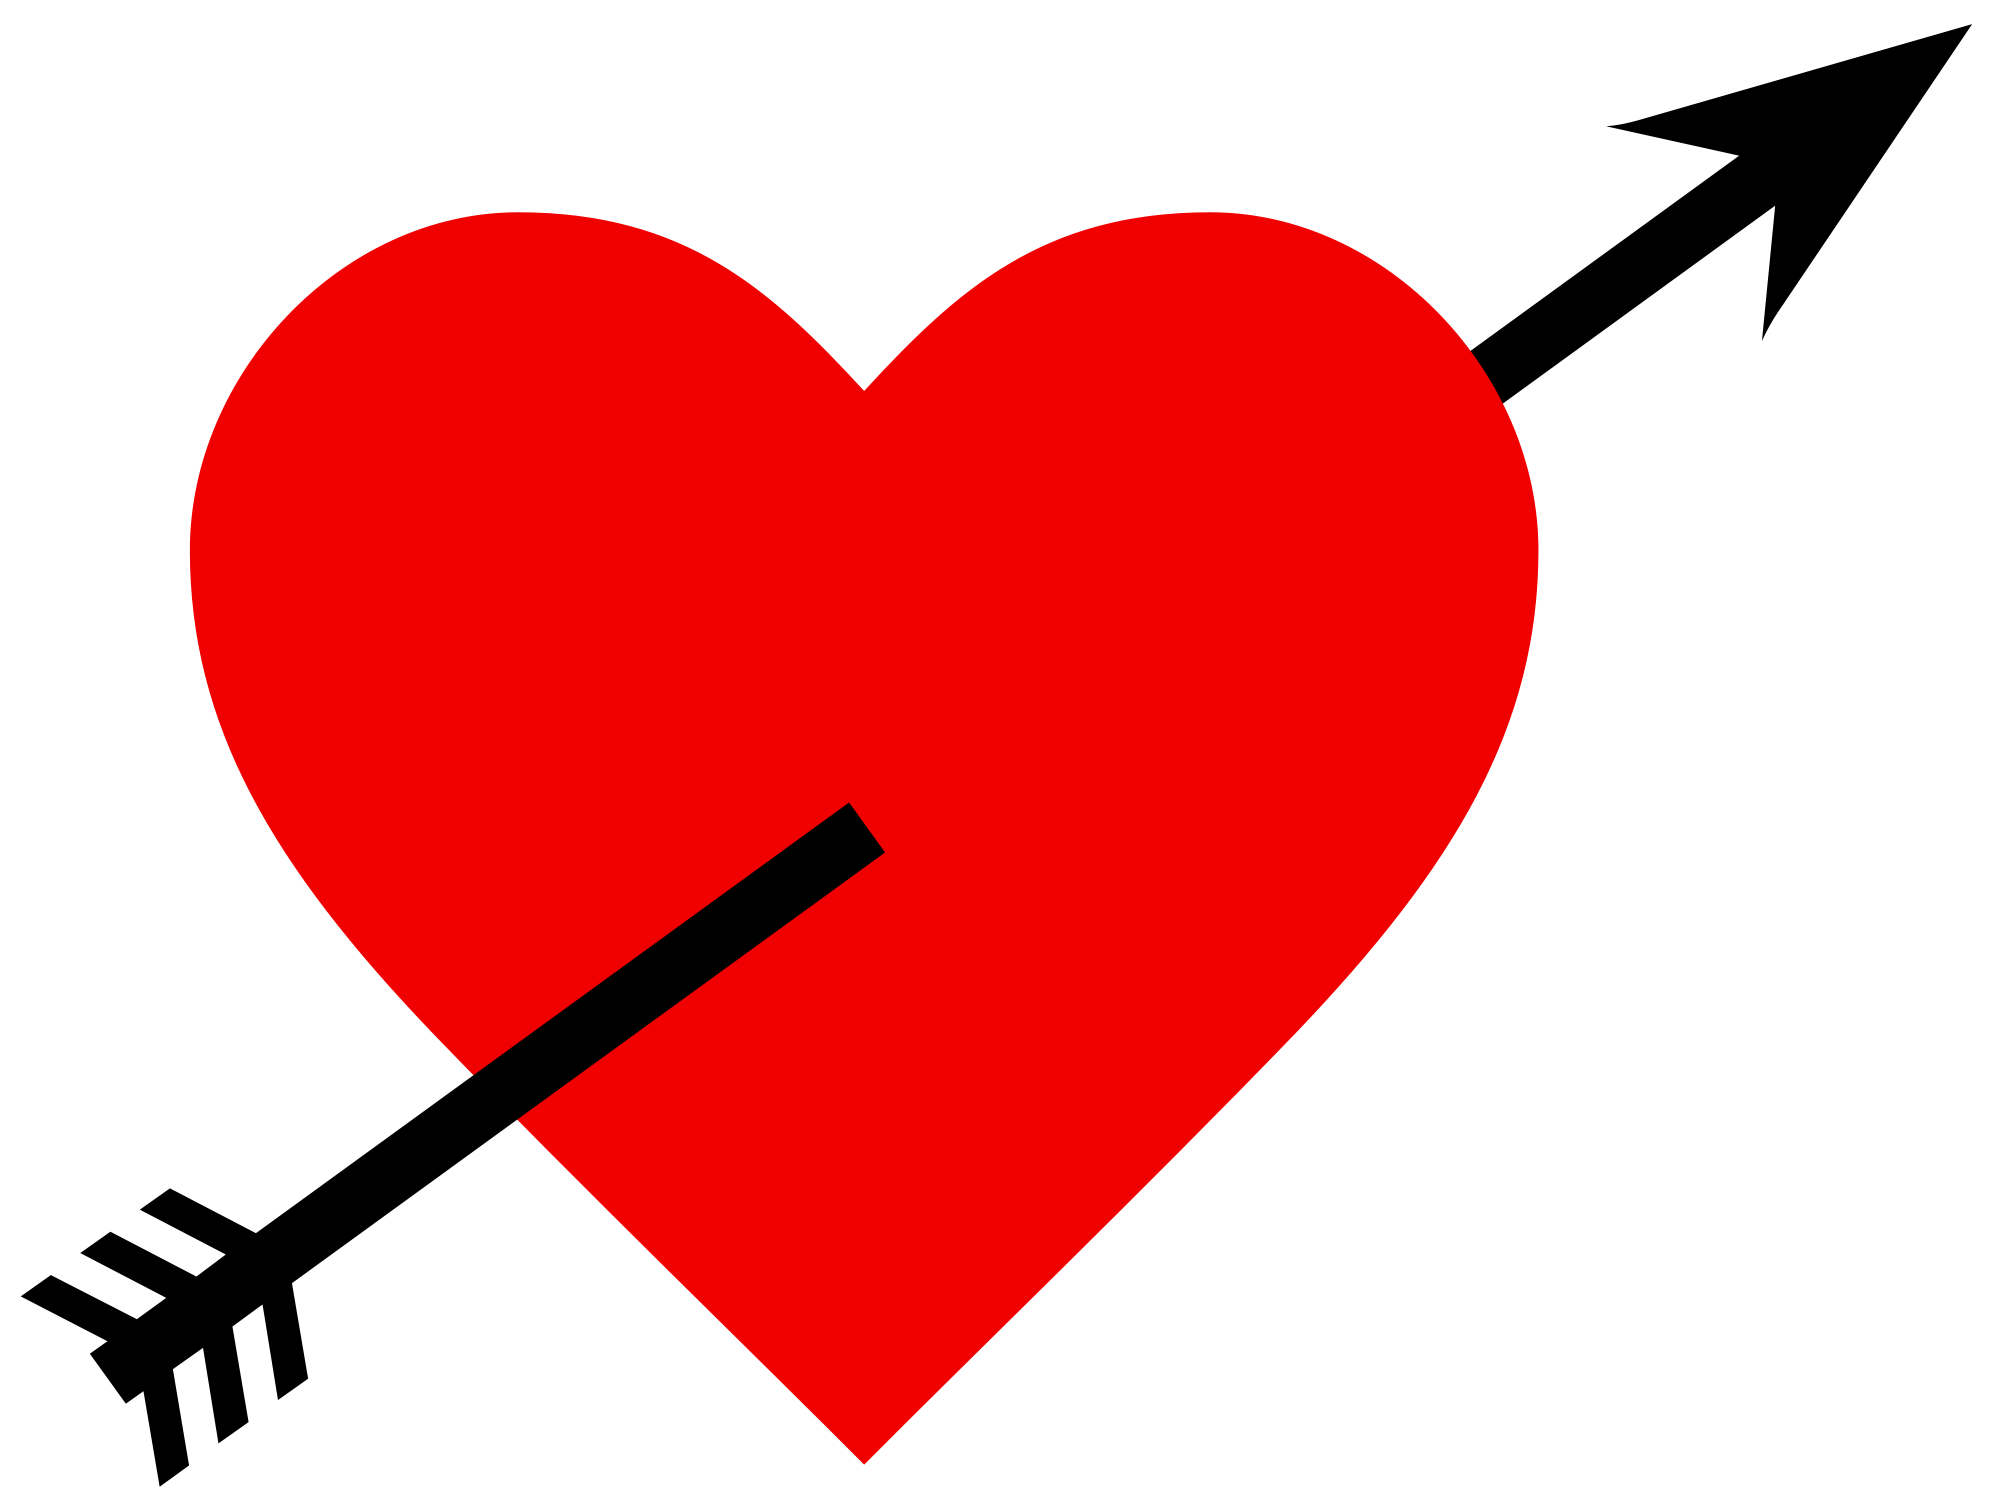 File:Love-heart-arrow.svg - Wikimedia Commons